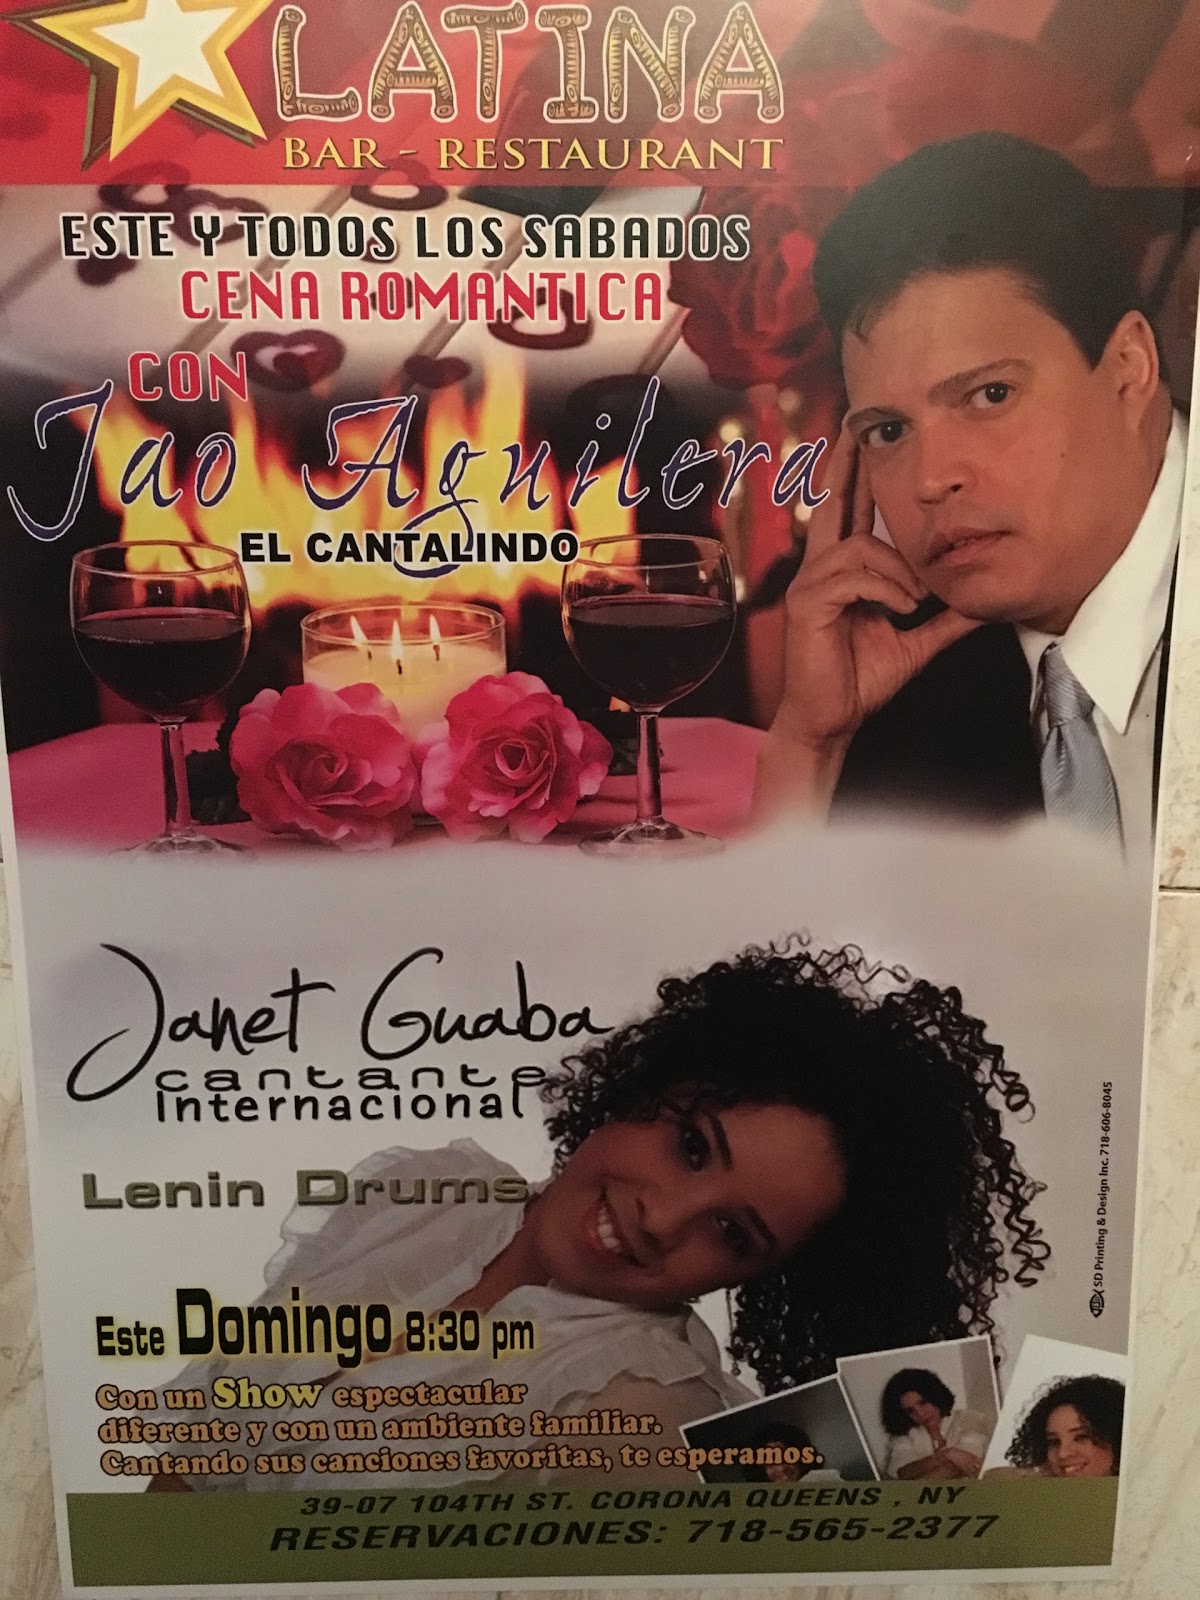 Photo of Estrella Latina in Corona City, New York, United States - 8 Picture of Restaurant, Food, Point of interest, Establishment